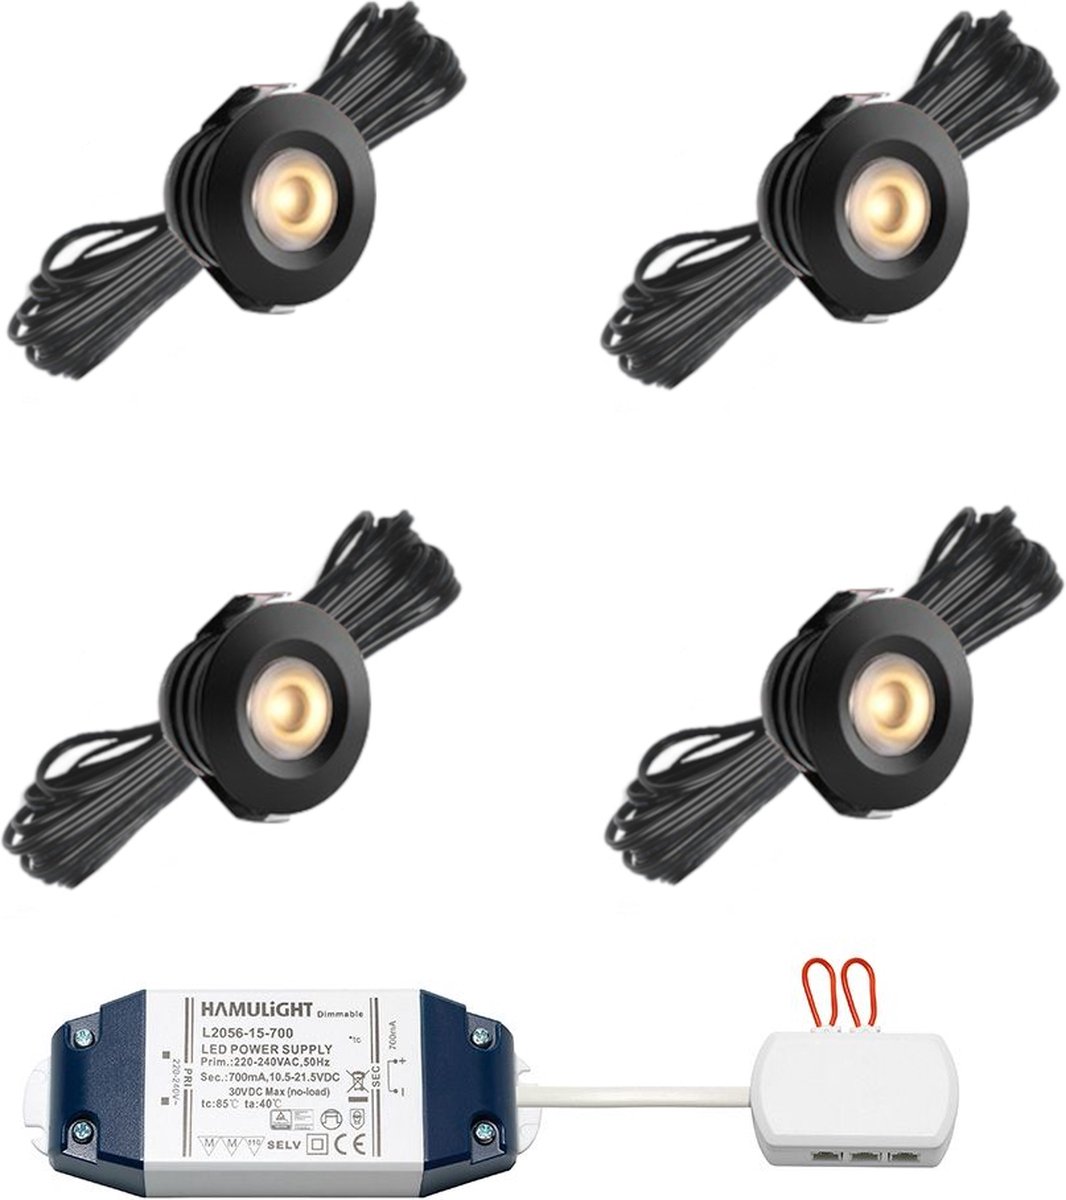 LED inbouwspot Pals bas zwart - inclusief trafo - inbouwspots / downlights / plafondspots / led spot / 3W / dimbaar / warm wit / rond / 230V / IP44 / - set van 4 stuks